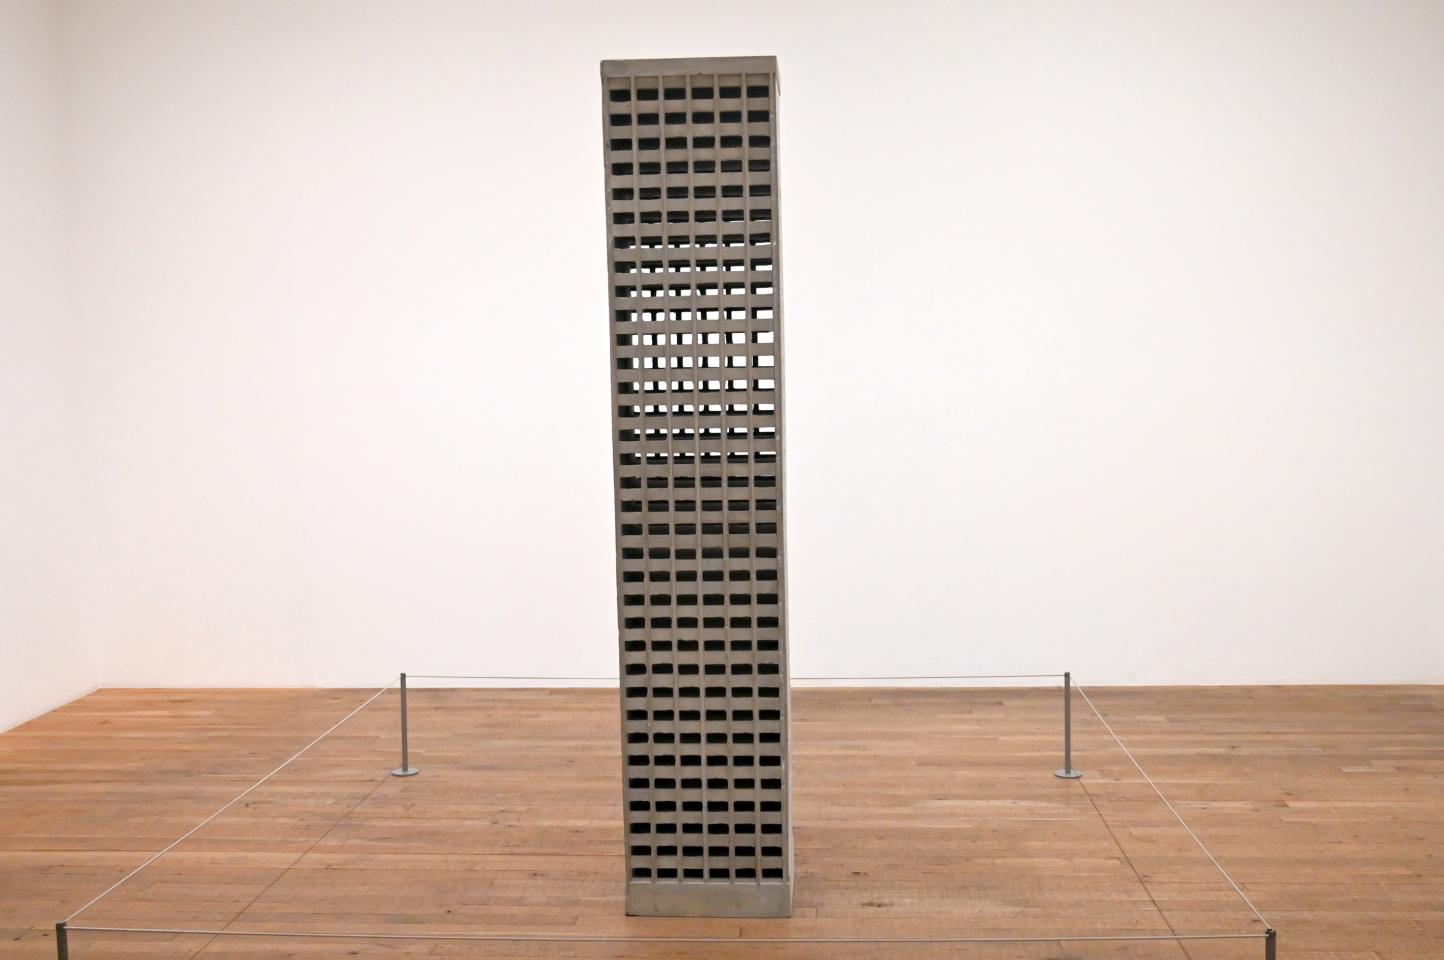 Marwan Rechmaoui (2001), Denkmal für die Lebenden, London, Tate Gallery of Modern Art (Tate Modern), Artist and Society 1, 2001